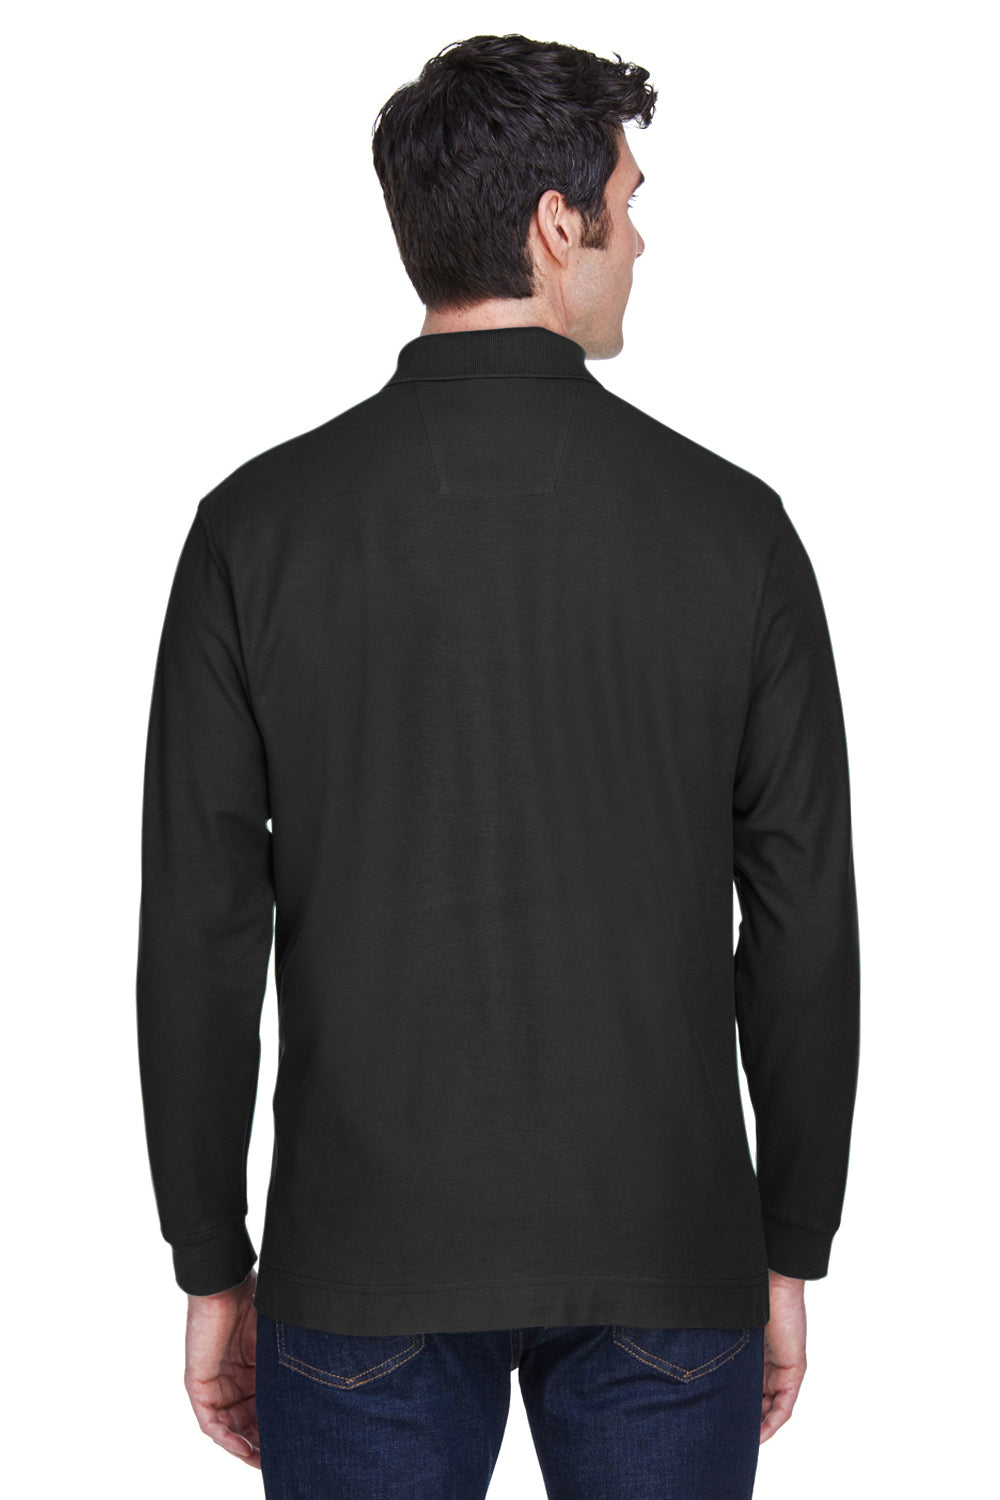 Devon & Jones D110 Mens Long Sleeve Polo Shirt Black Back